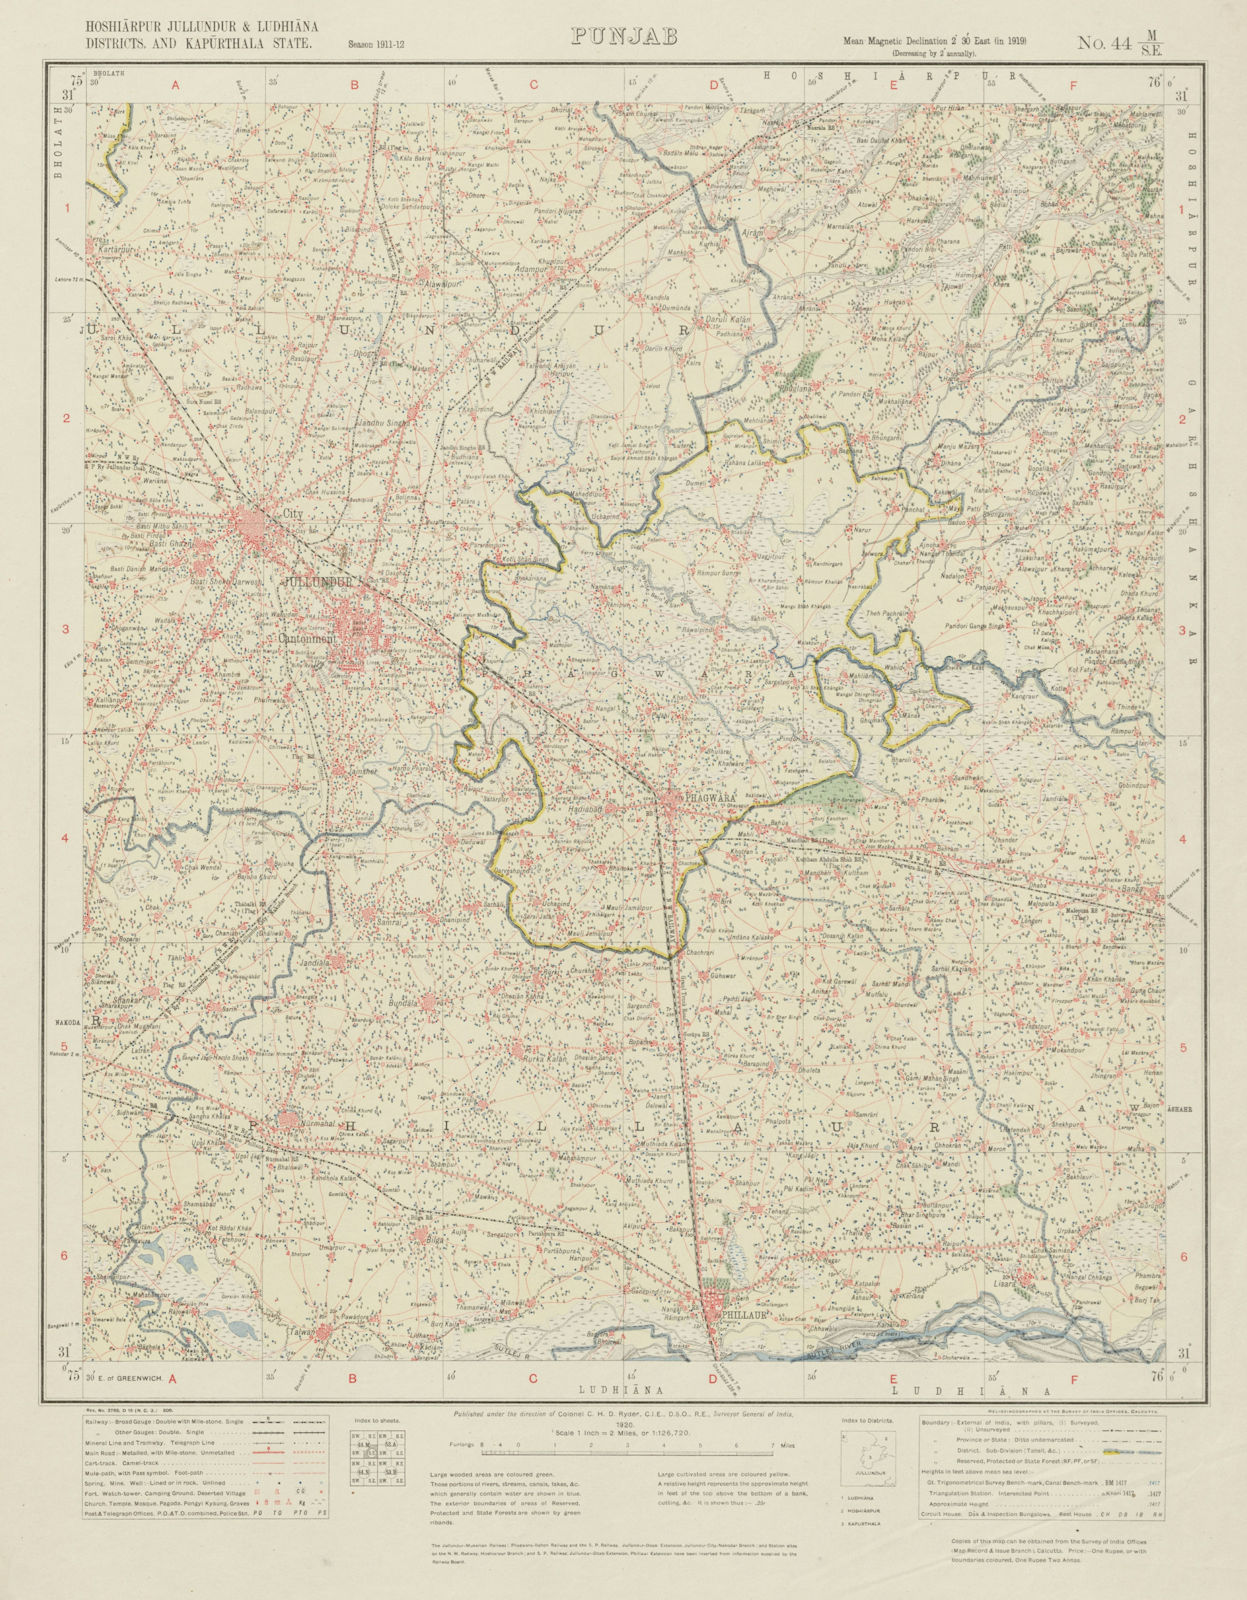 SURVEY OF INDIA 44 M/SE Pakistan Punjab Jalandhar Phillaur Phagwara 1920 map